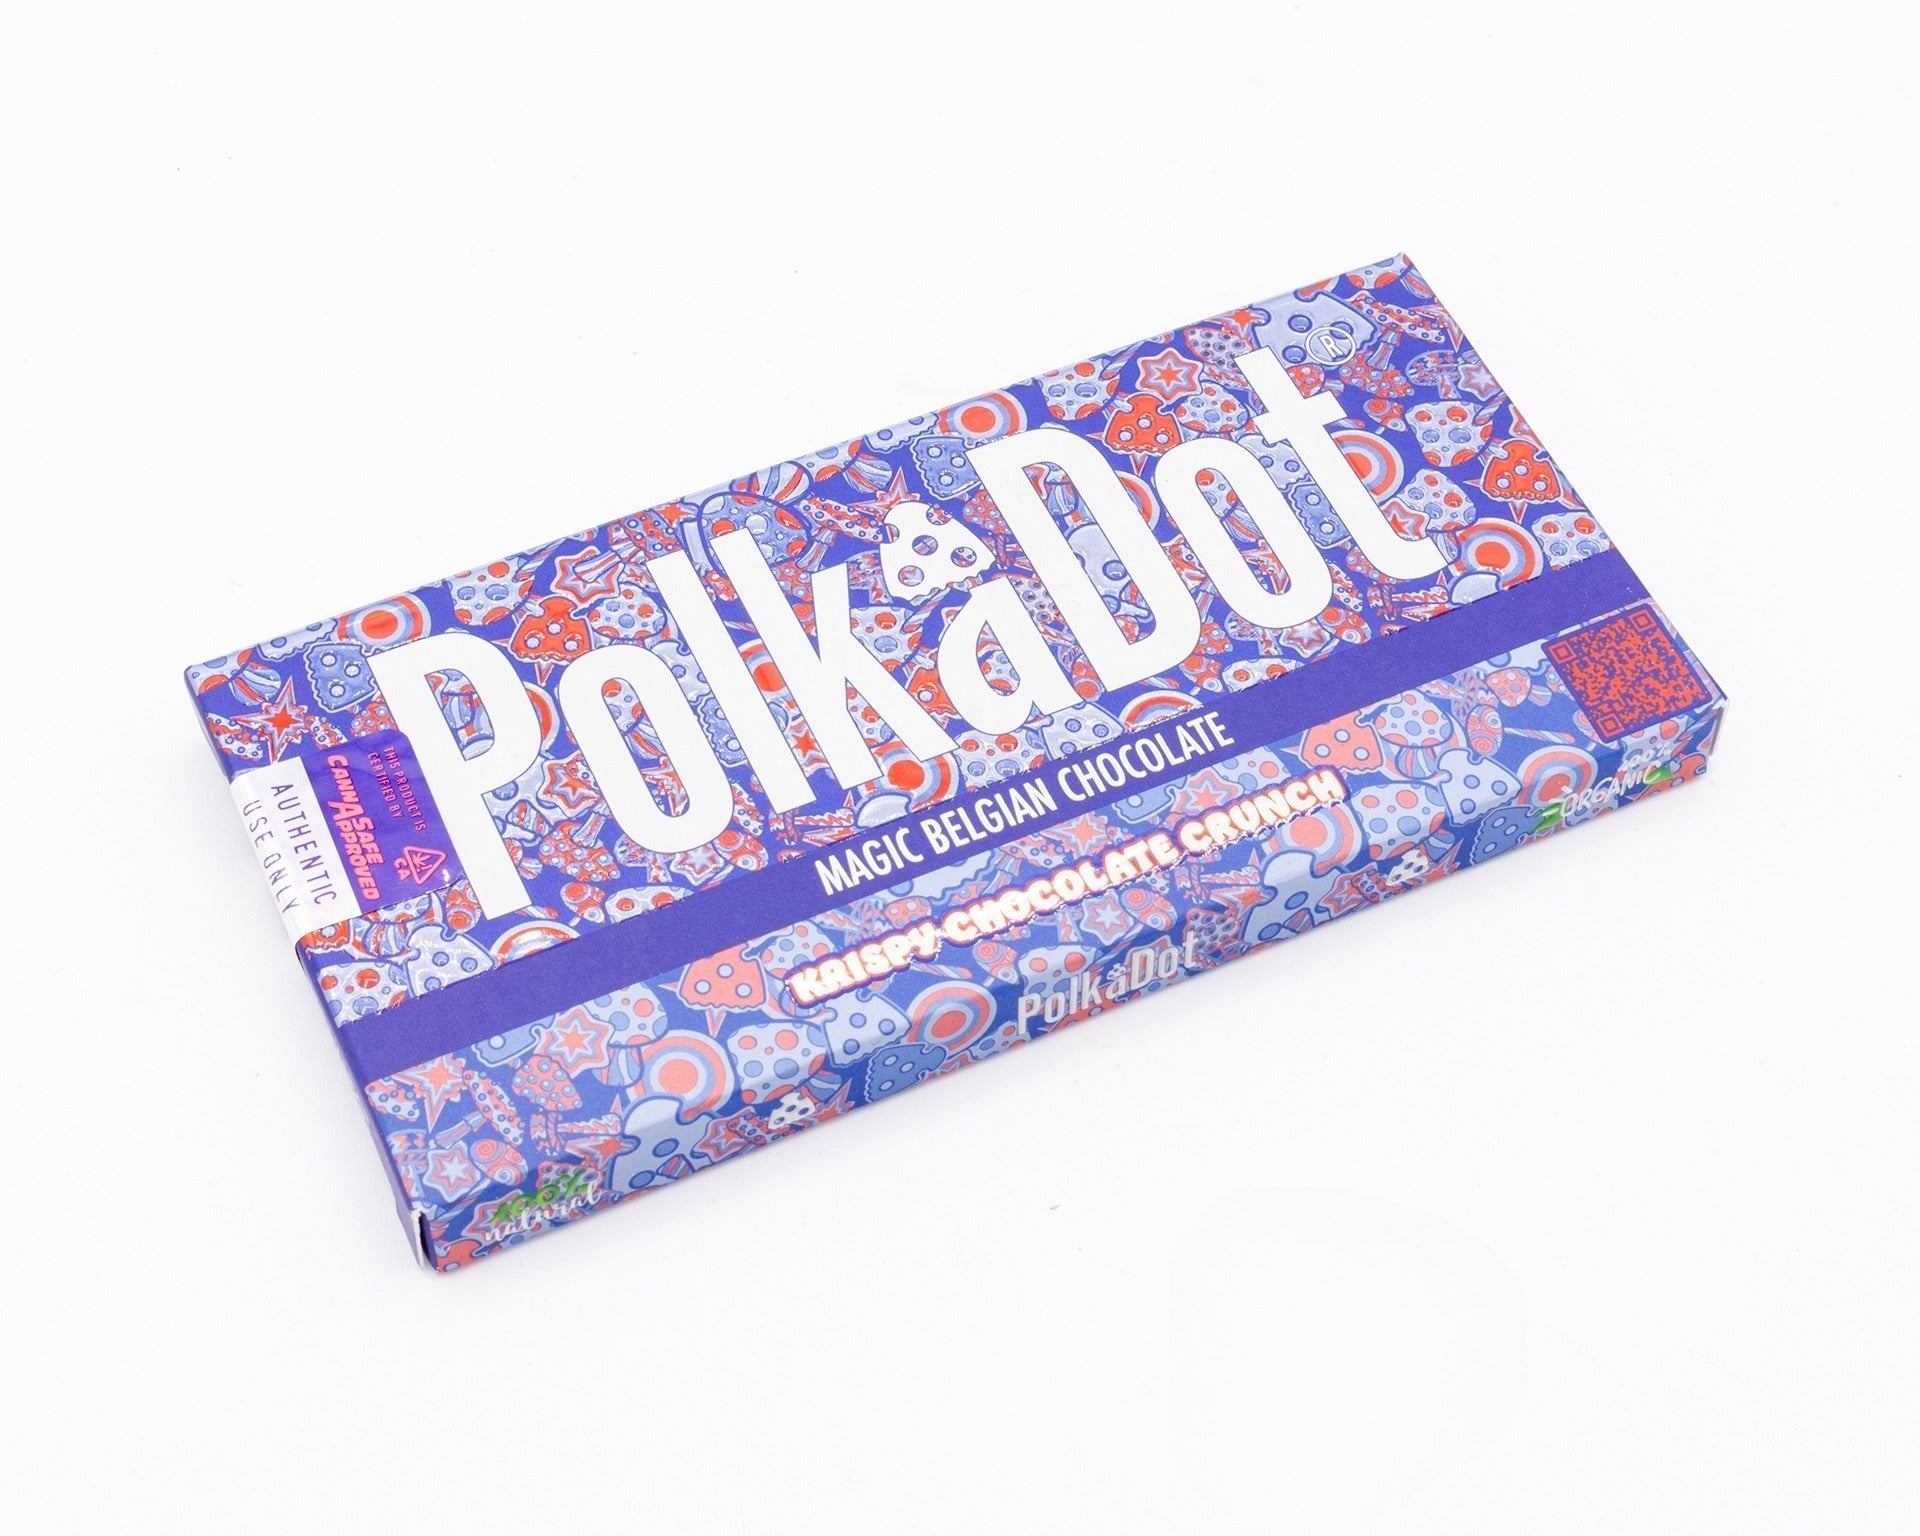 Polk a Dot x URB Mushroom Chocolate Bar (10,000mg) Best Price